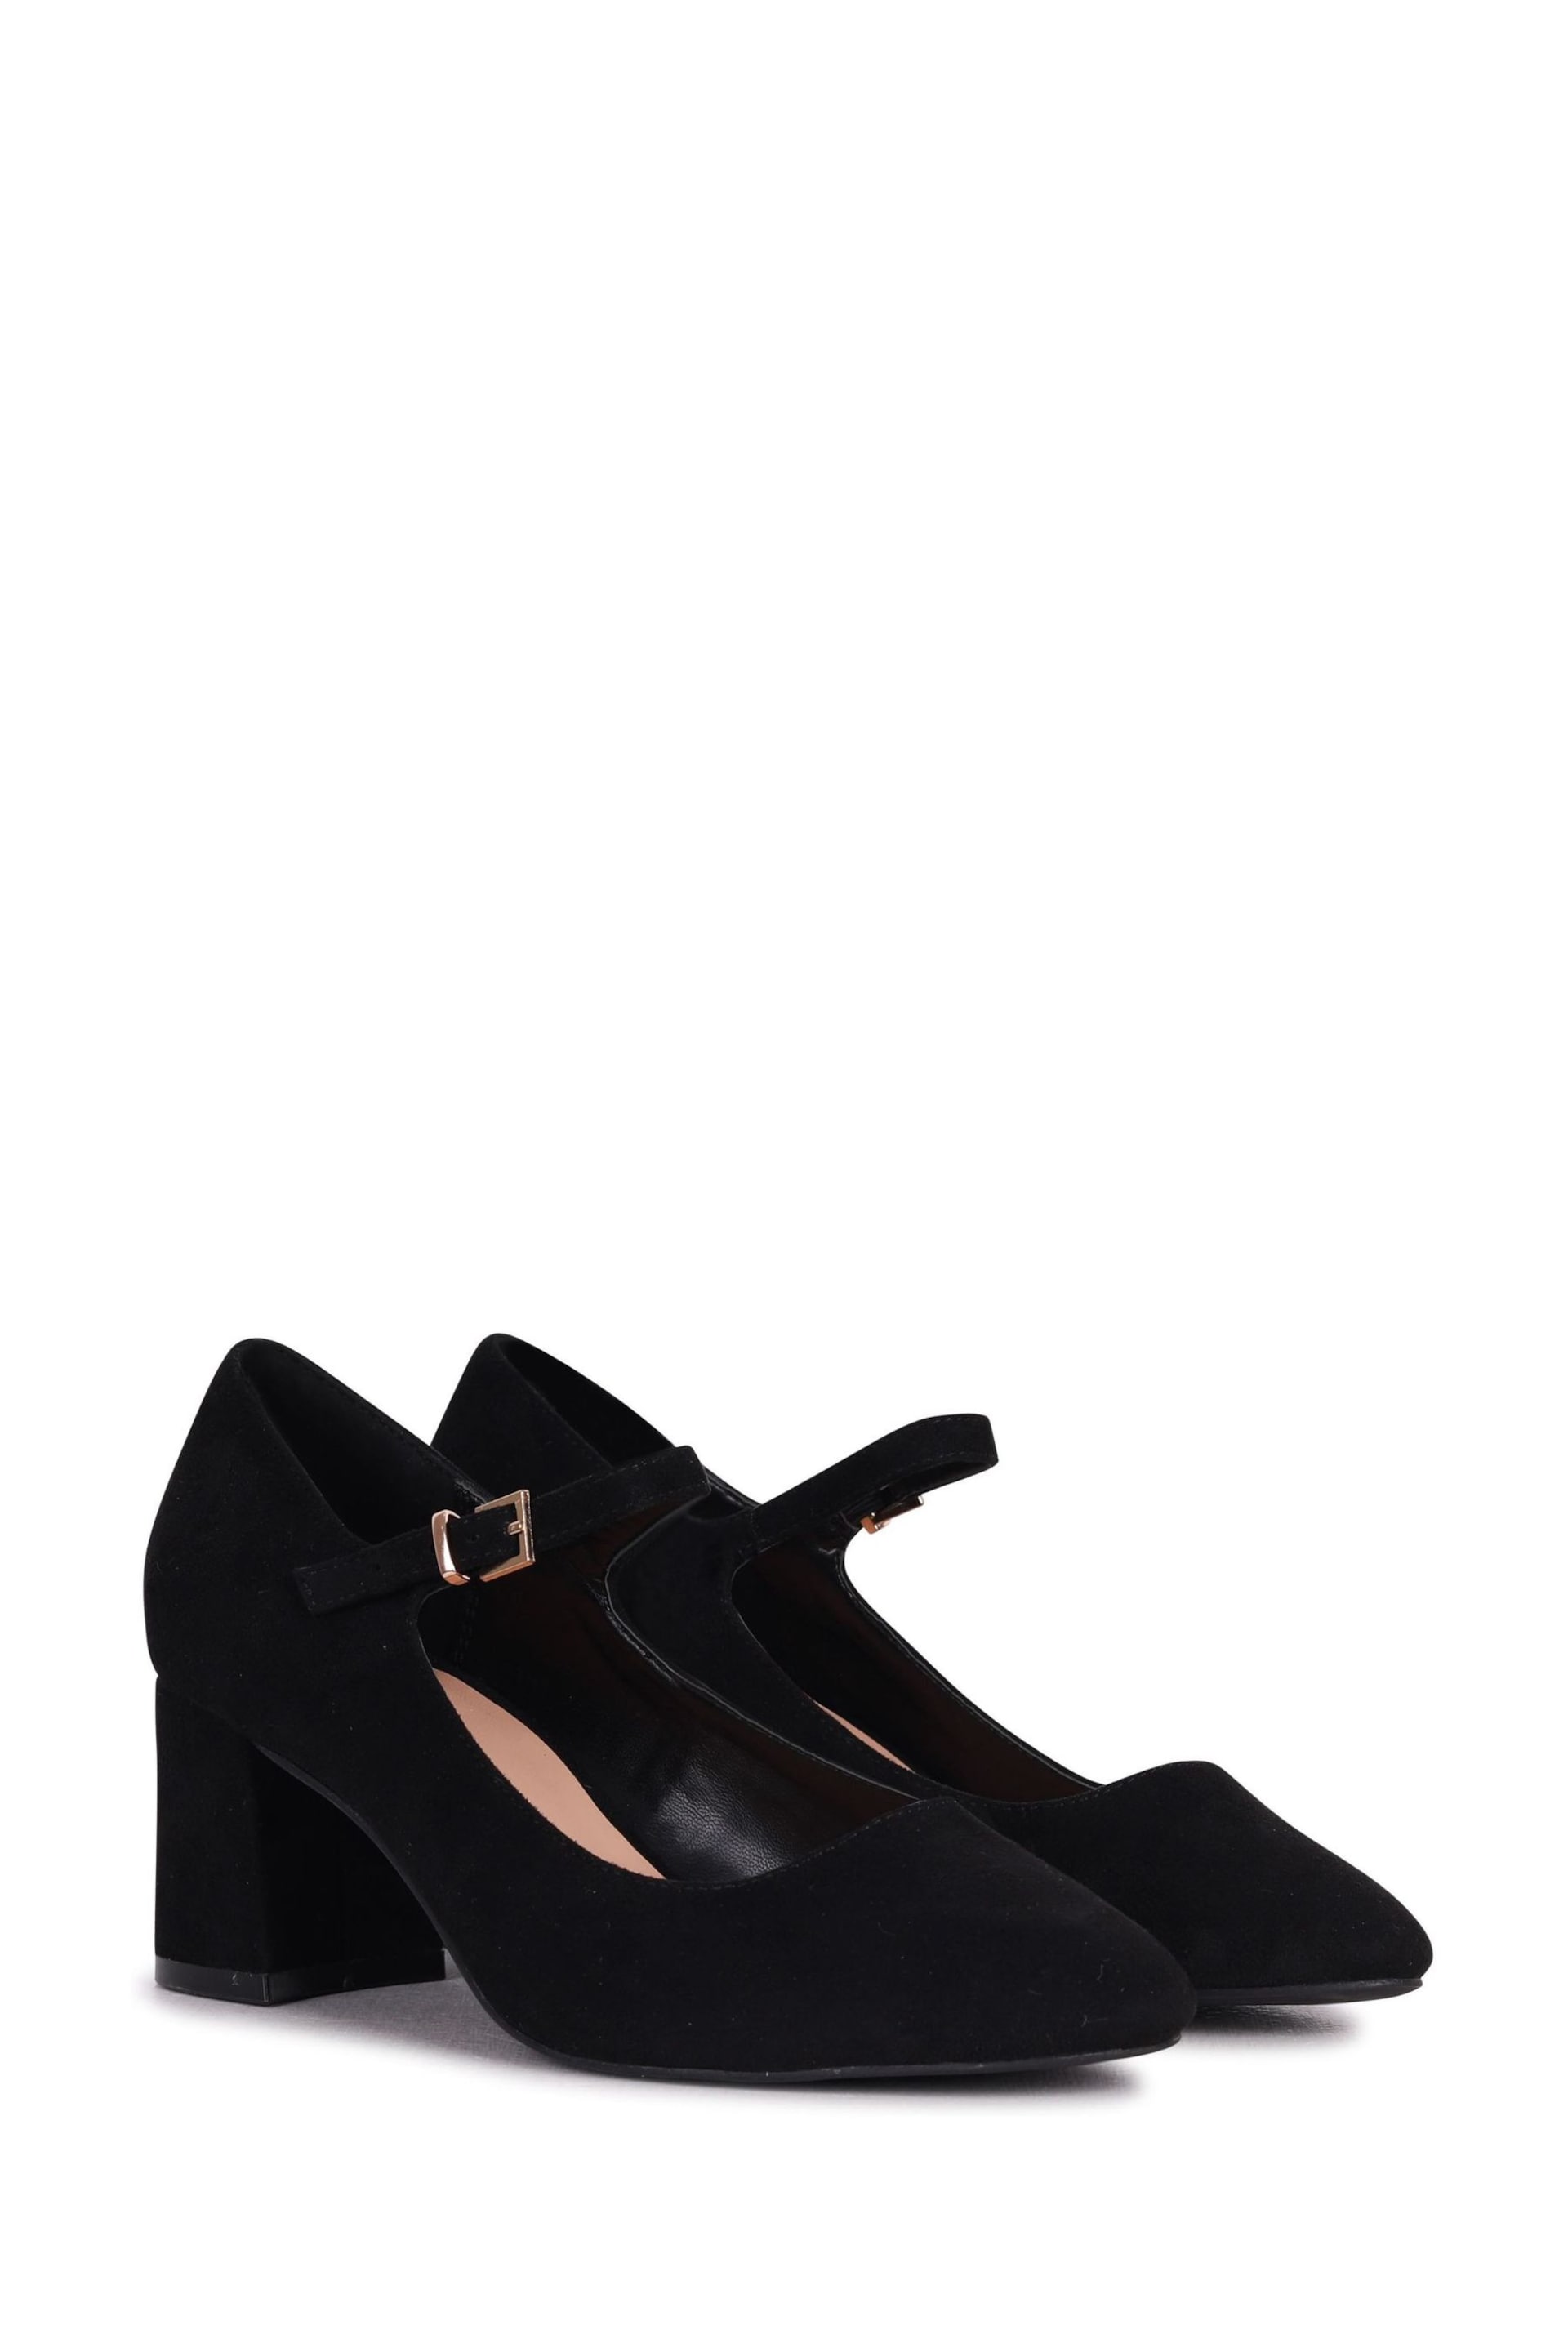 Linzi Black Madeline Court Heel with Block Heels - Image 3 of 4